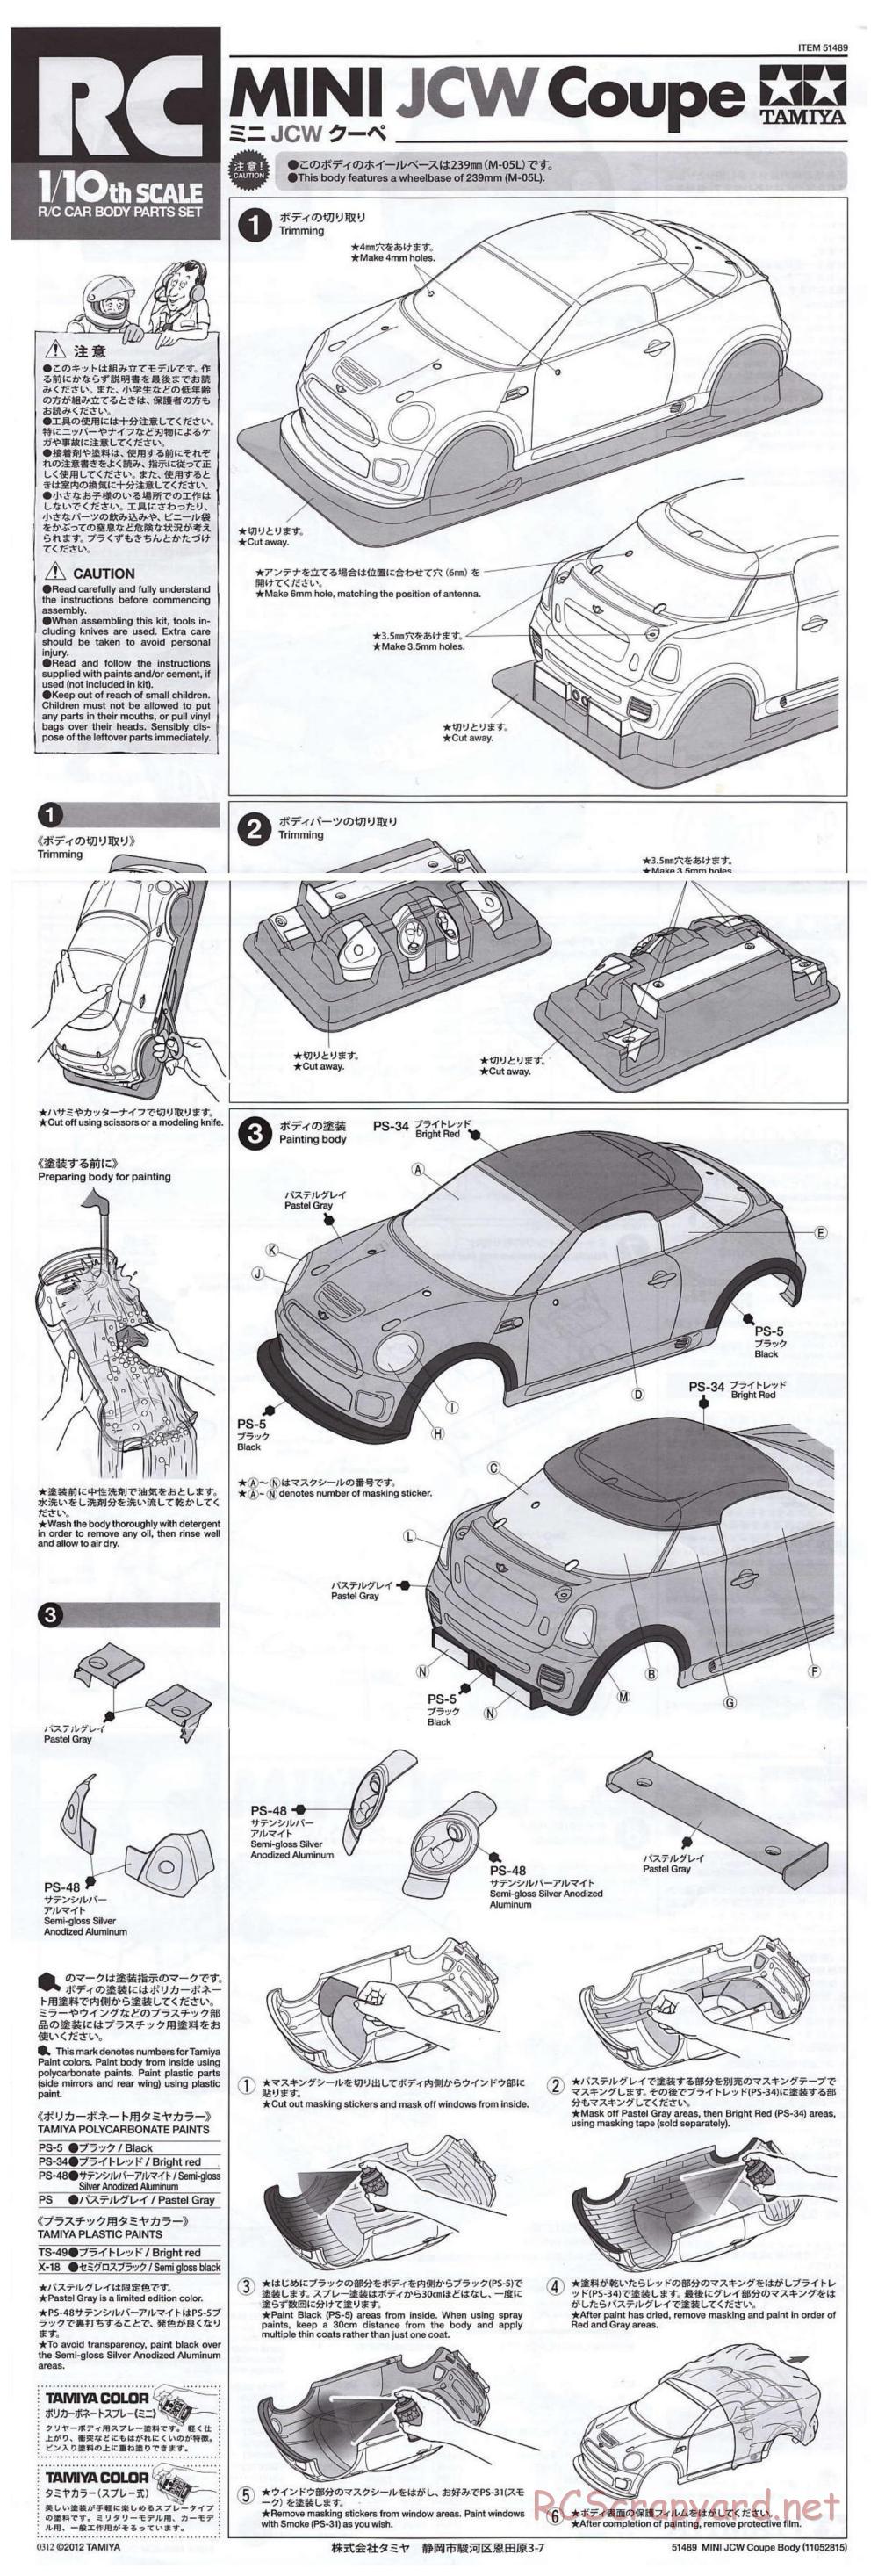 Tamiya - Mini JCW Coupe - M-05 Chassis - Body Manual - Page 1